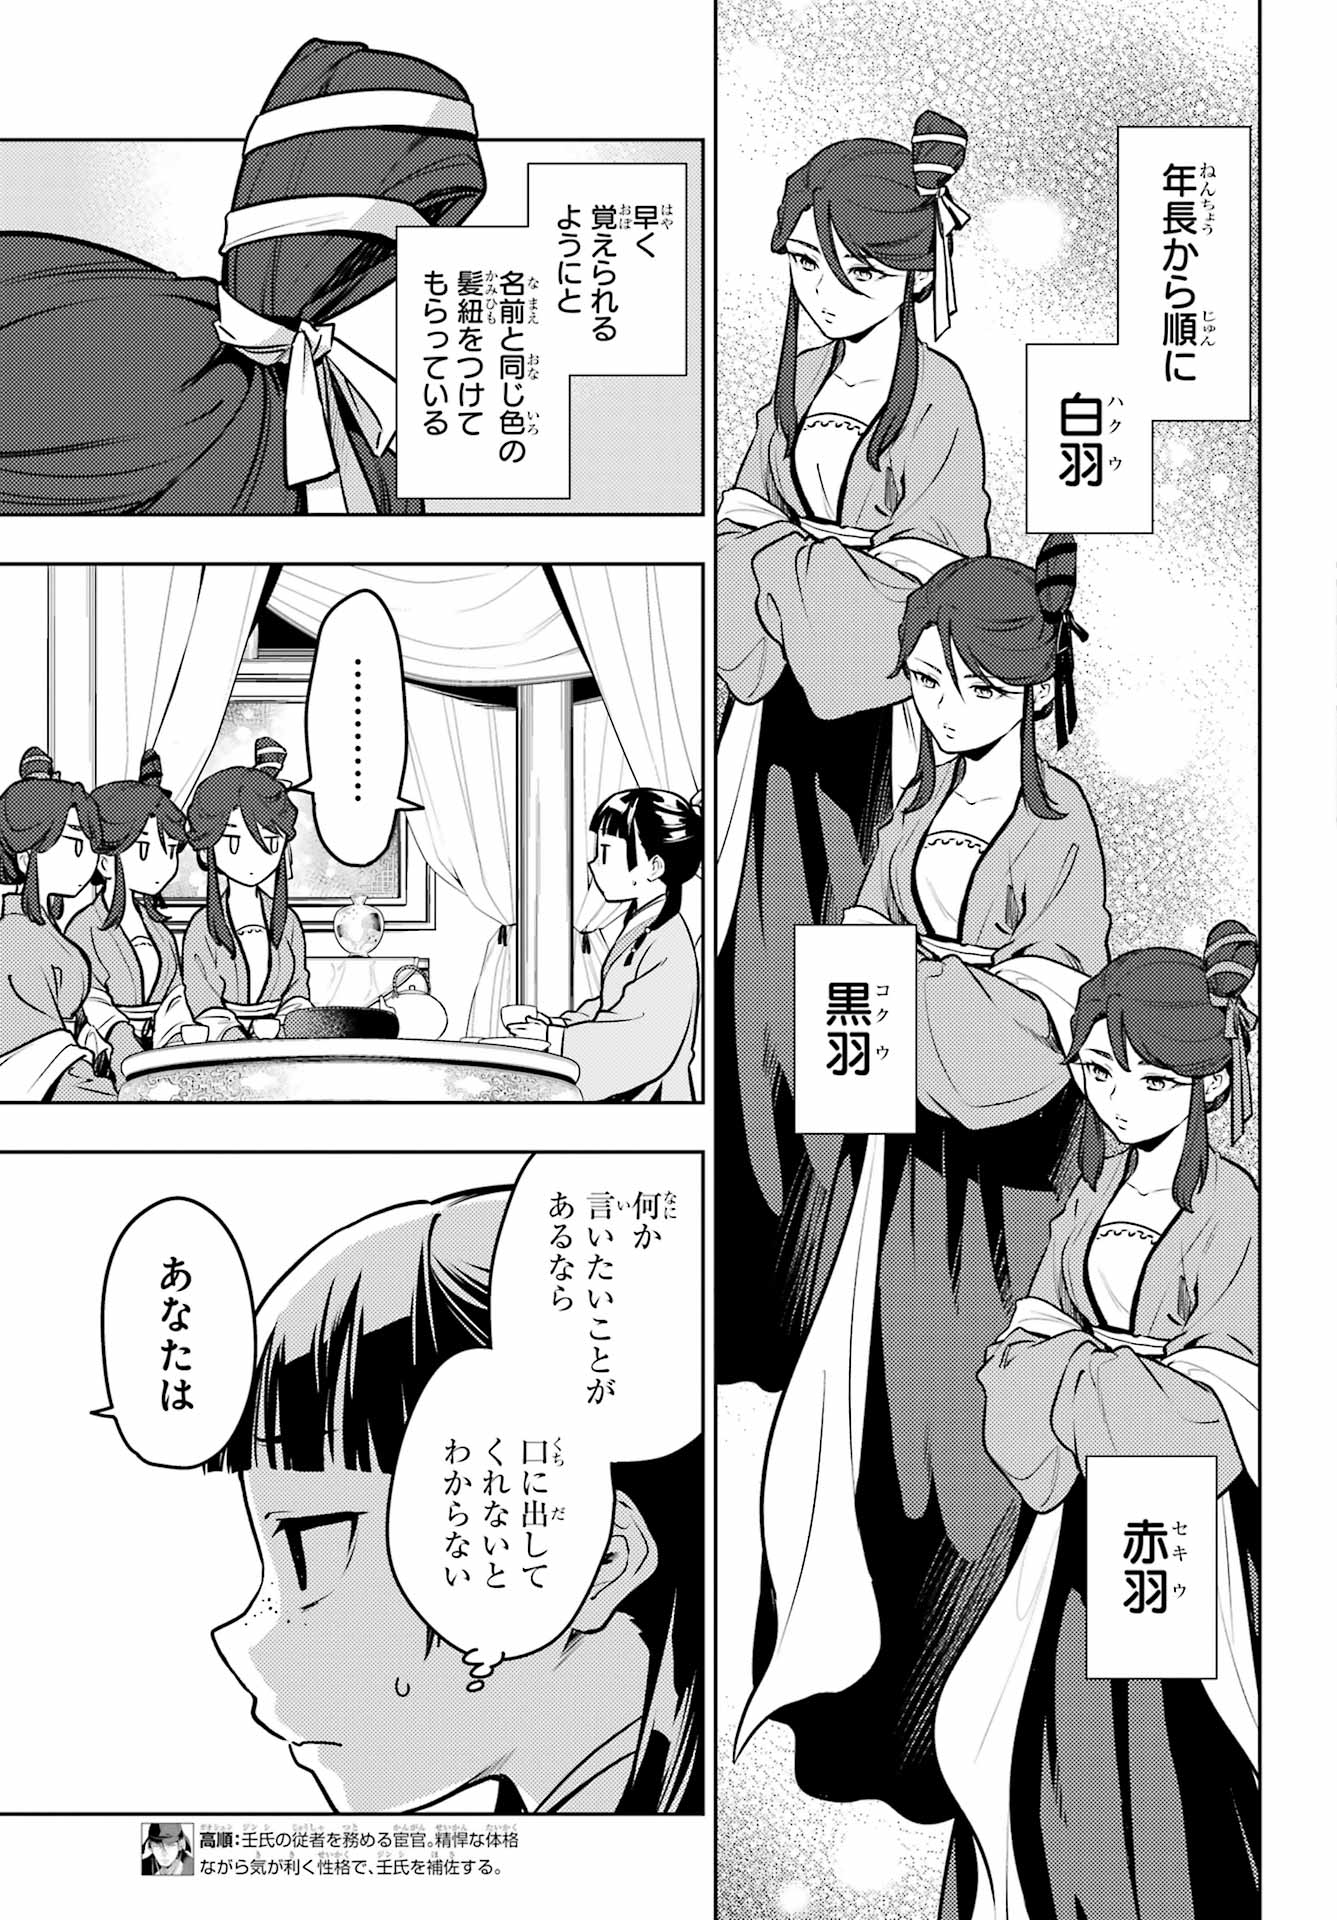 Kusuriya no Hitorigoto - Chapter 66 - Page 3